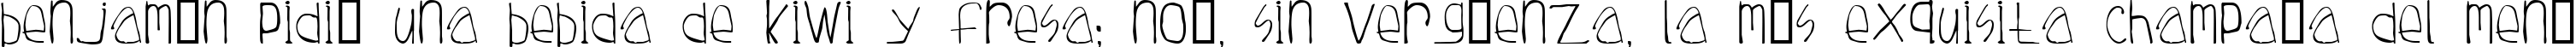 Пример написания шрифтом Tuesday текста на испанском